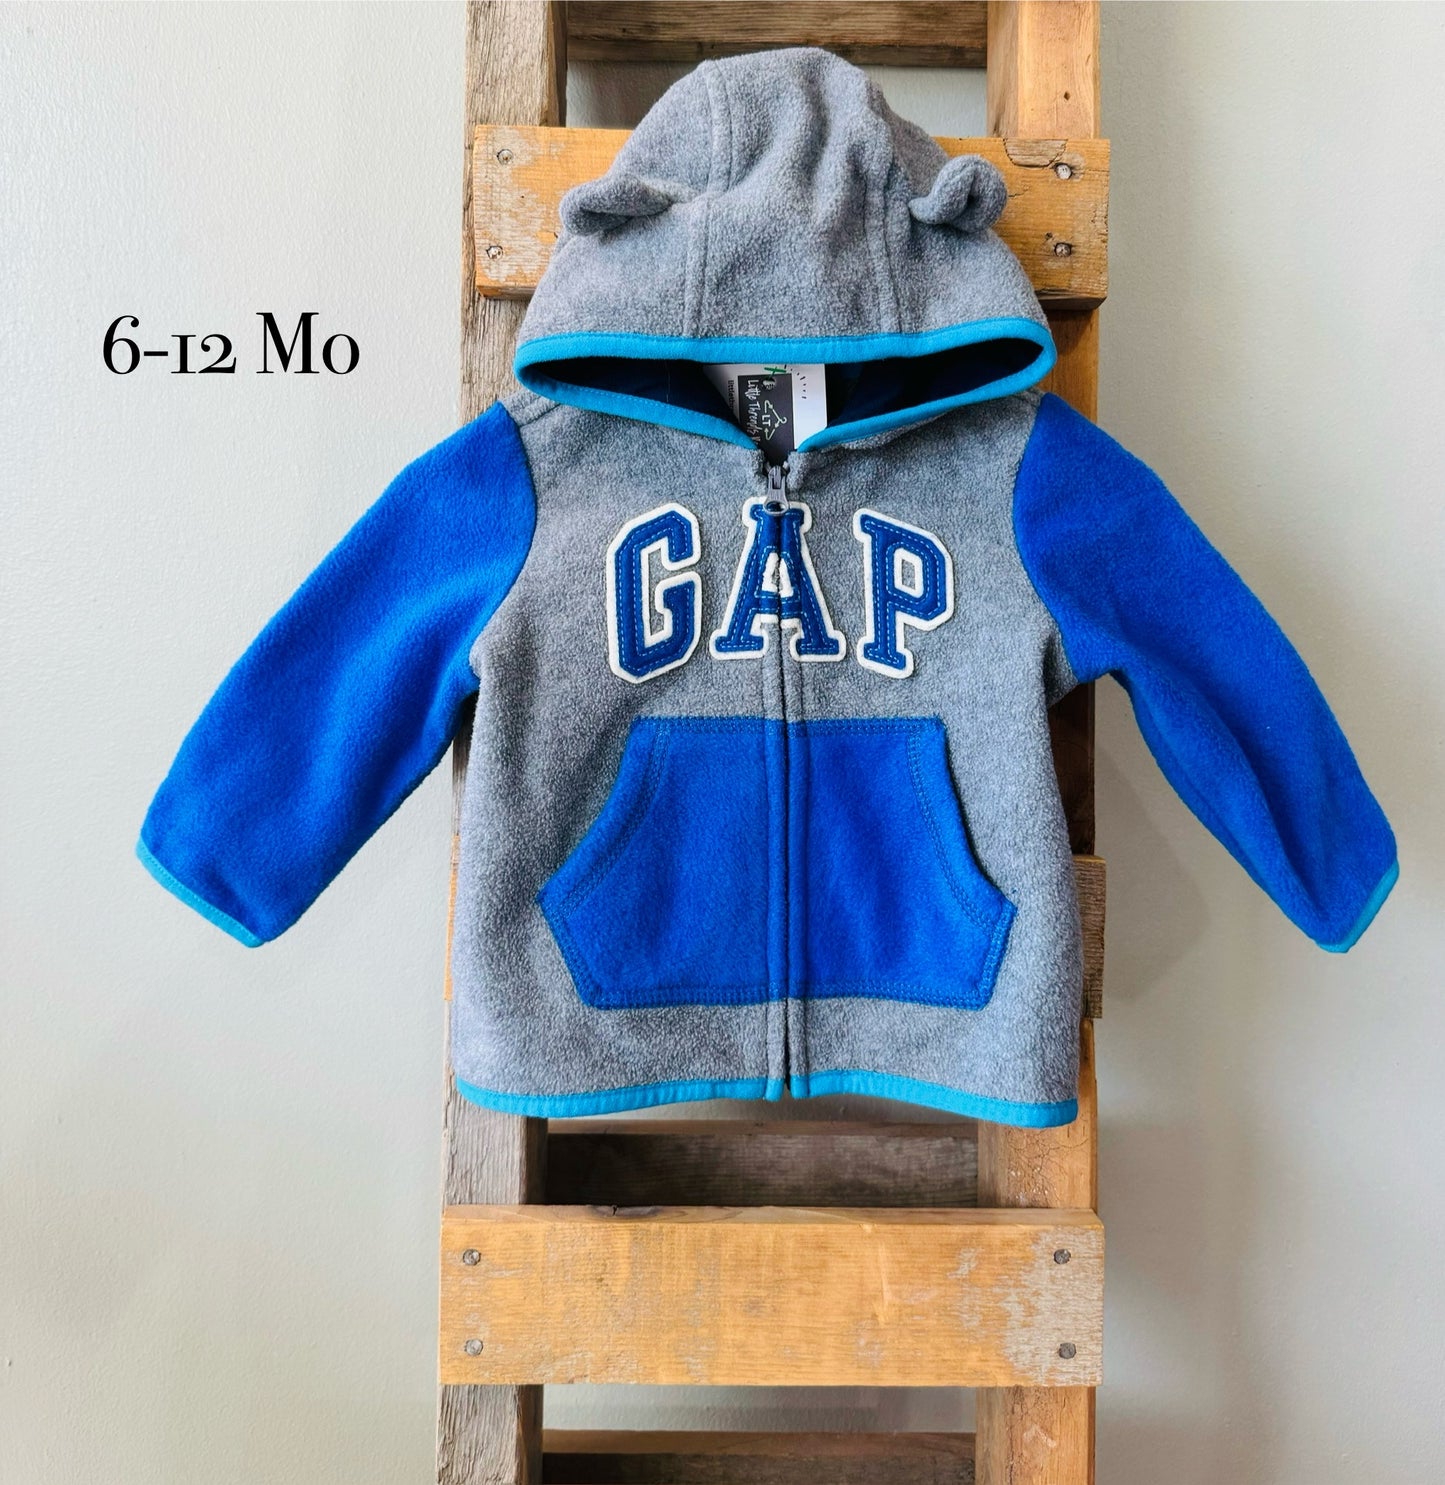 6-12 Mo - Gap zipper Hoodie